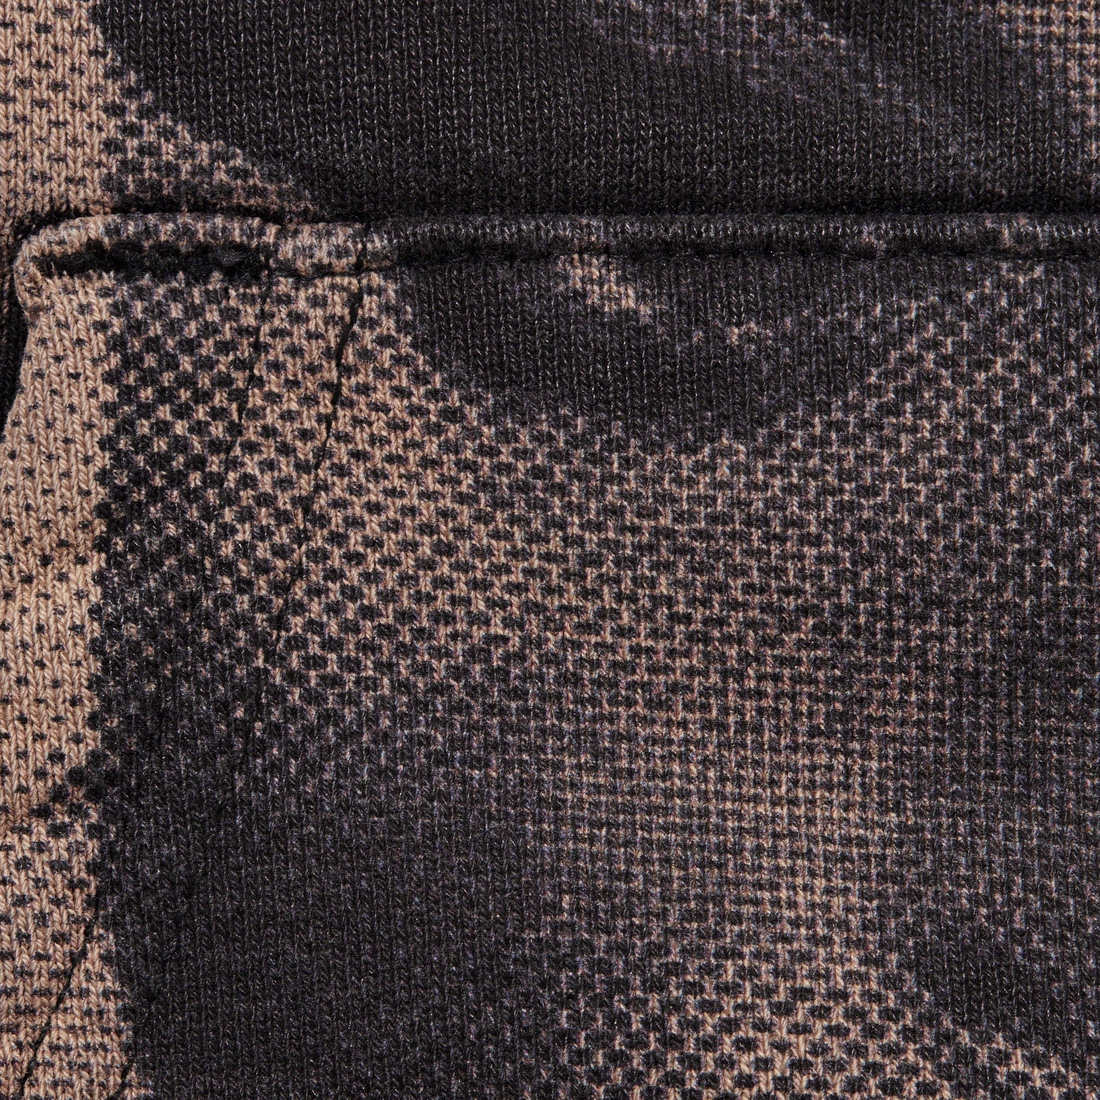 Details on Divine Zip Up Hooded Sweatshirt Black from spring summer 2023 (Price is $188)